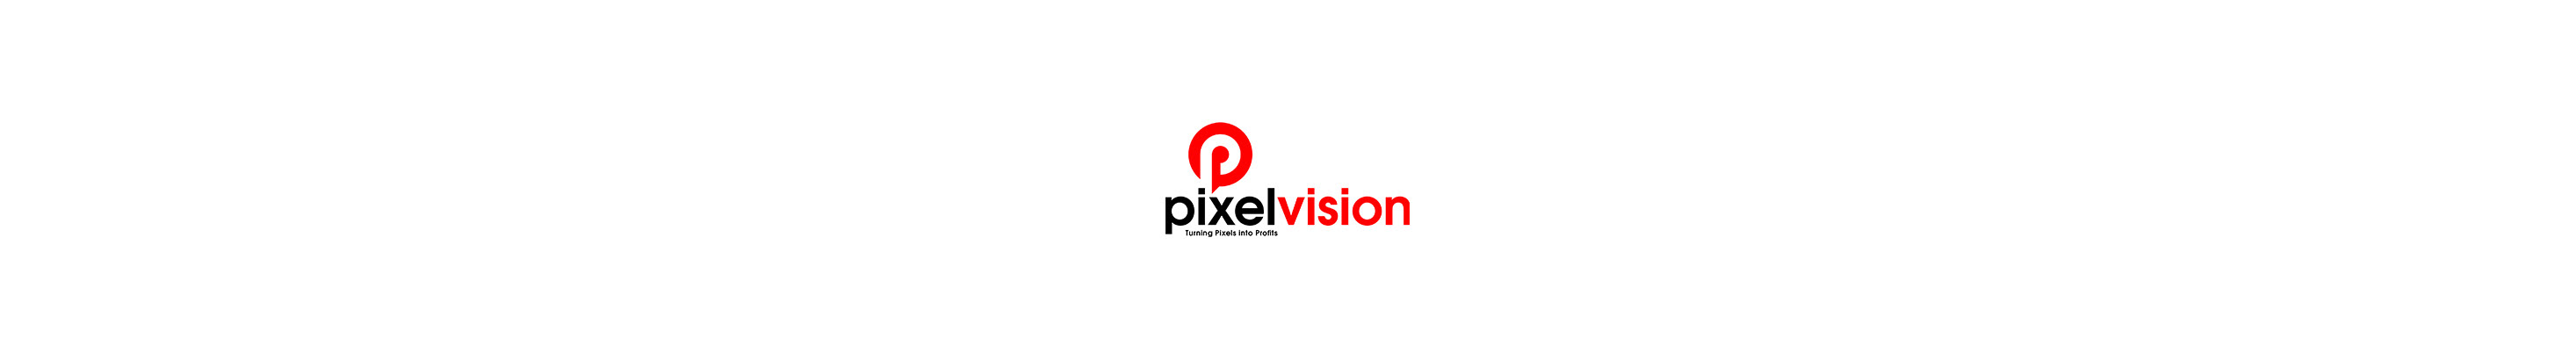 PIXEL VISION's profile banner